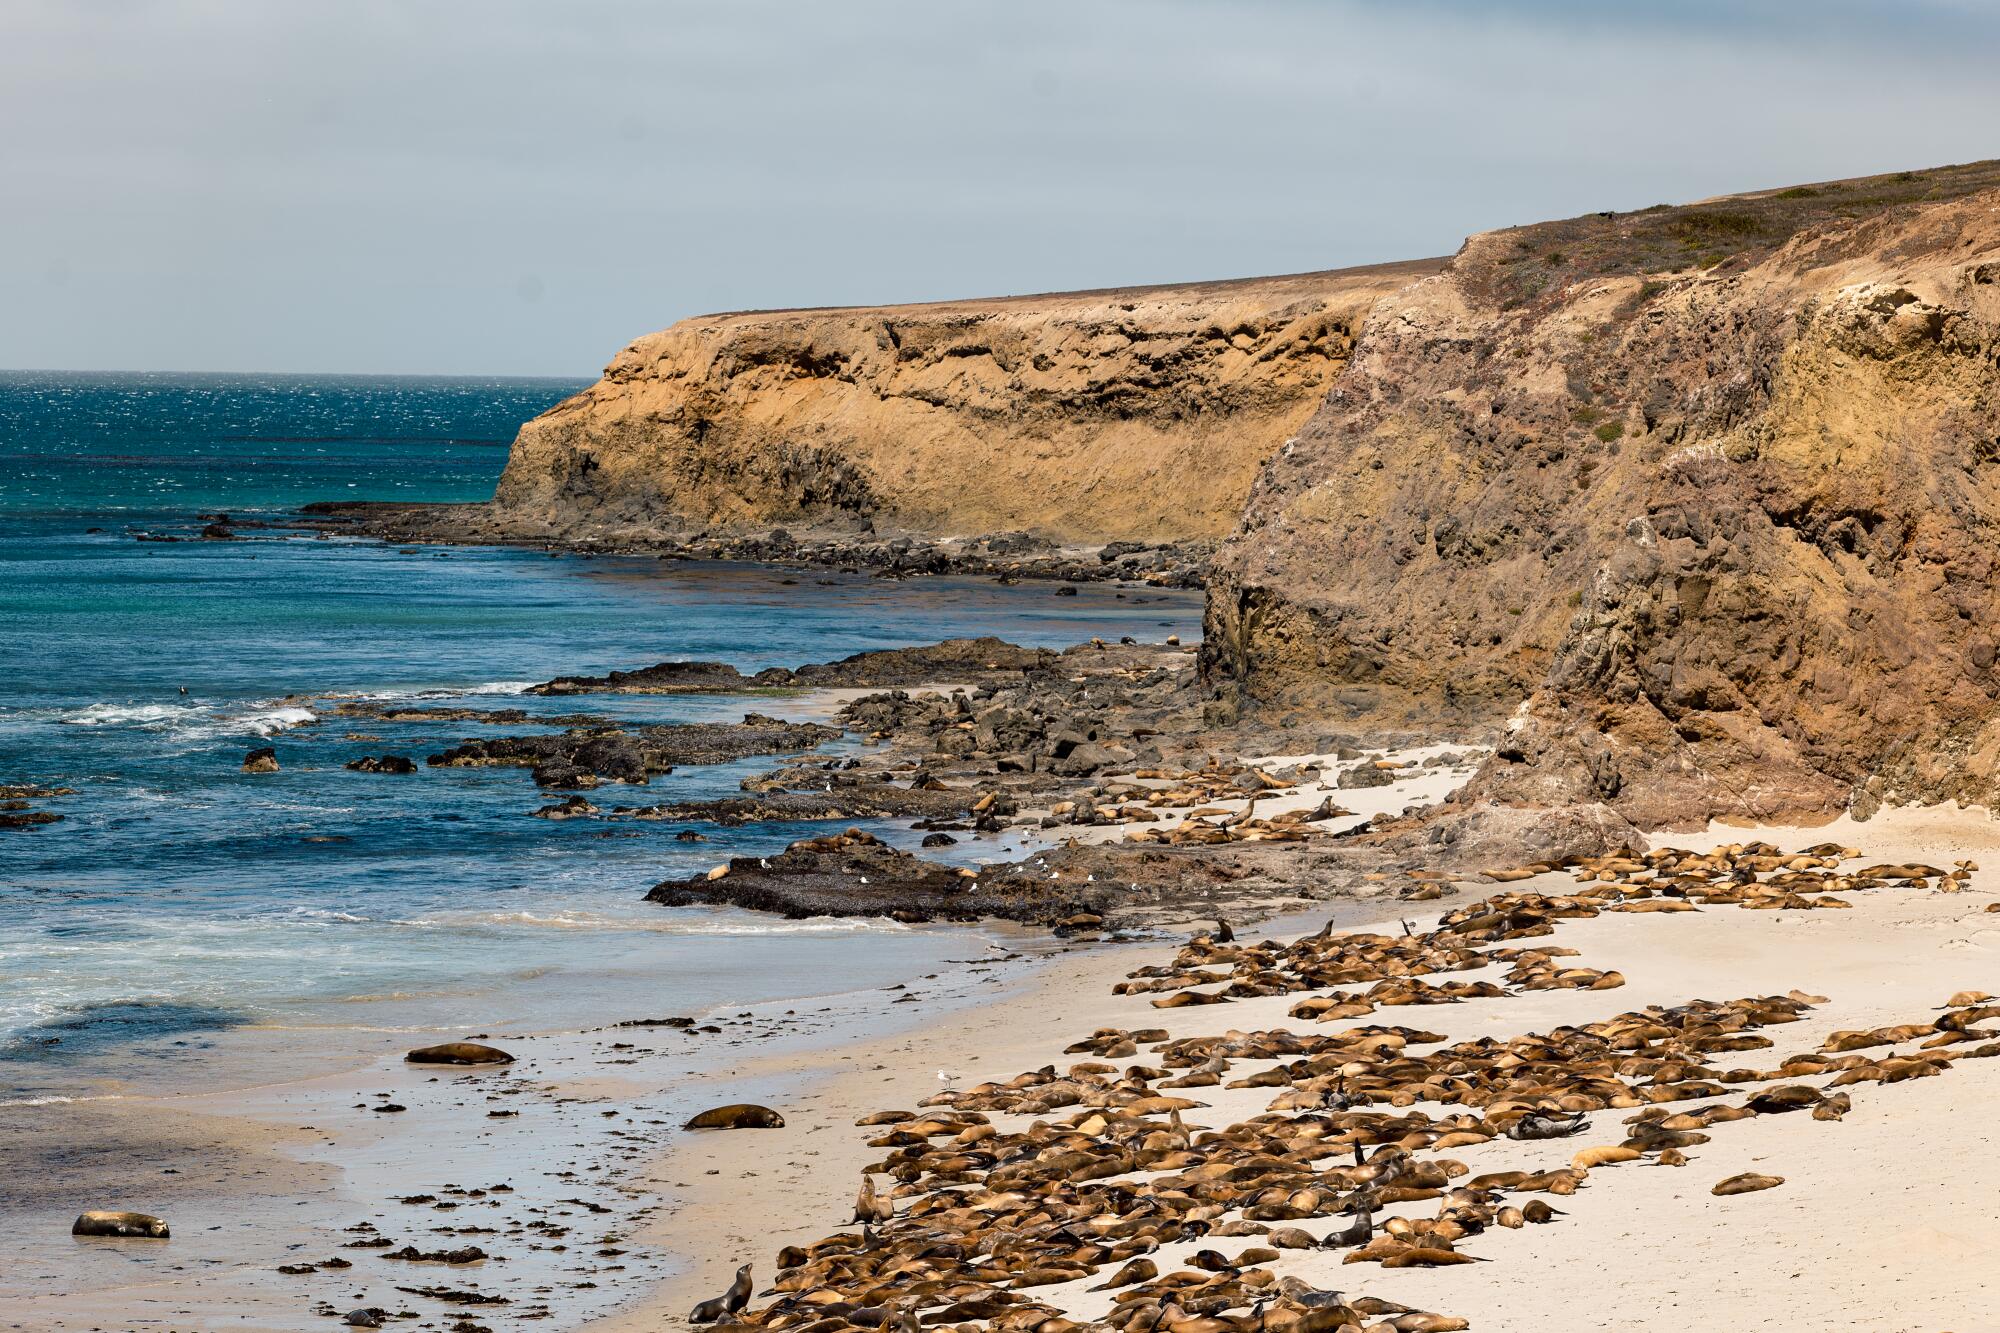 California sea lions and elephant seals lie on the beach near ocean and cliffs.